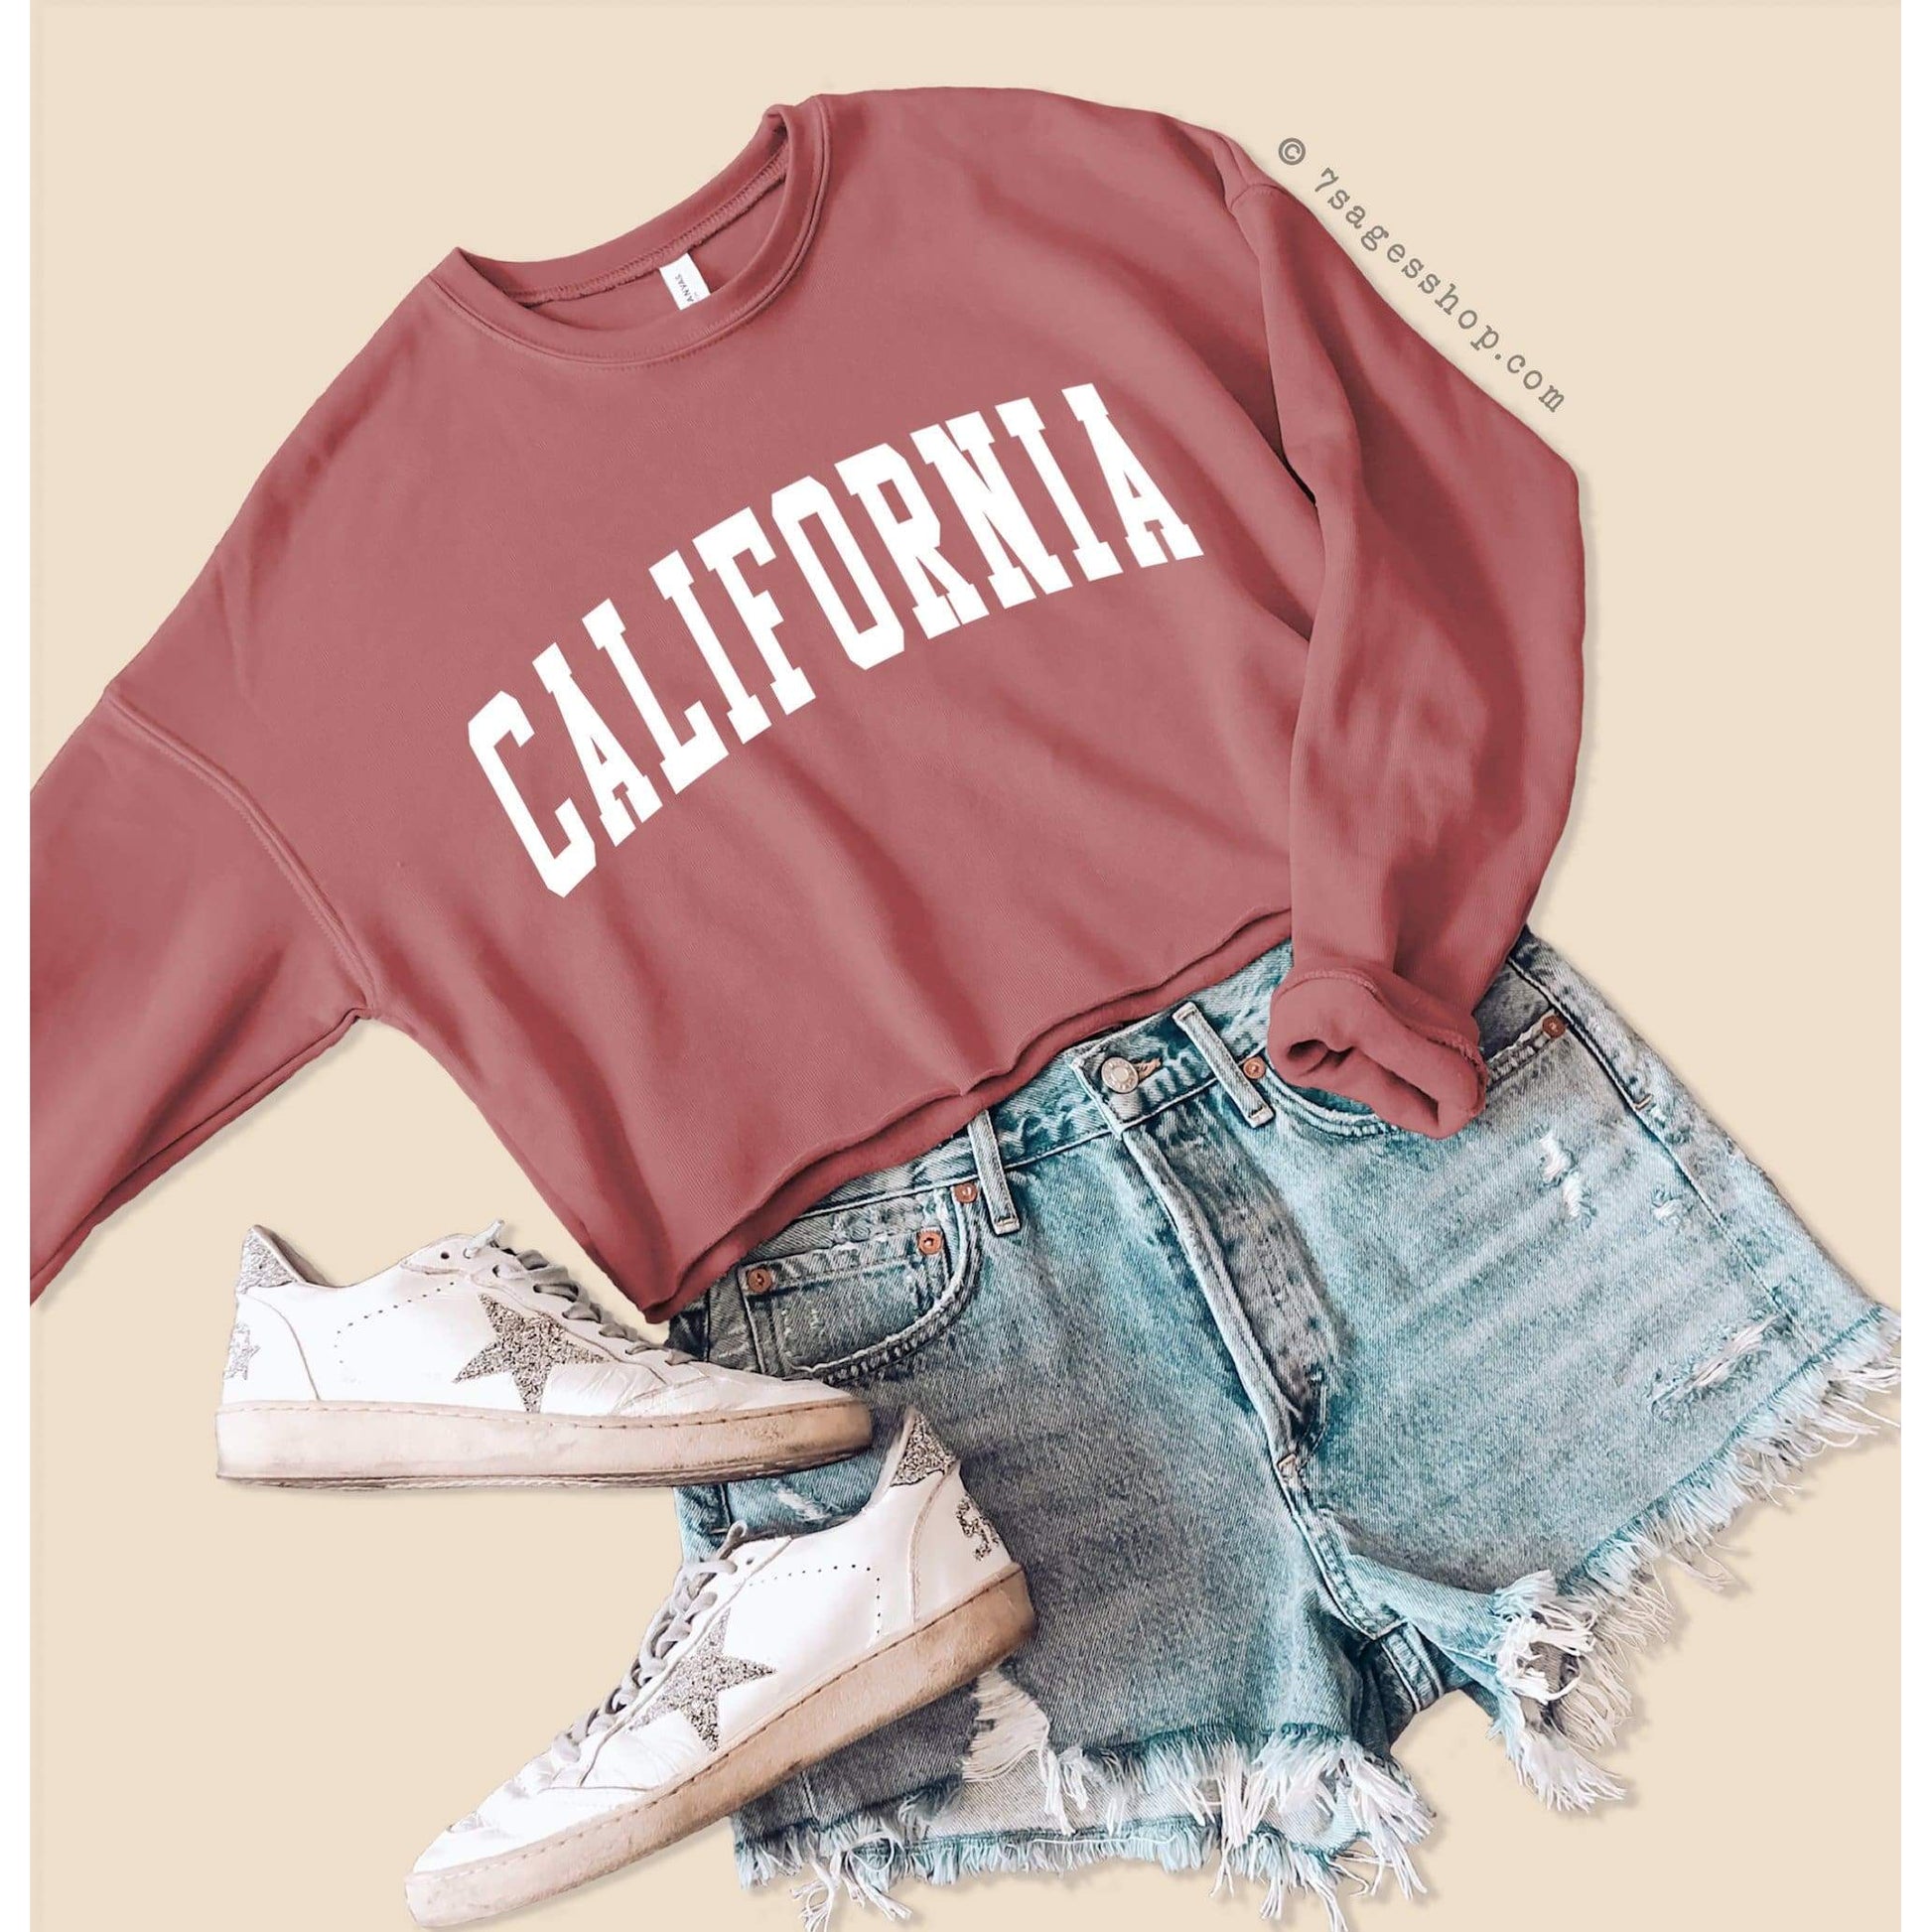 California Cropped Sweatshirt - California Sweatshirt - California Shirts - California Crop Top - Fleece Sweatshirt - West Coast Sweatshirt